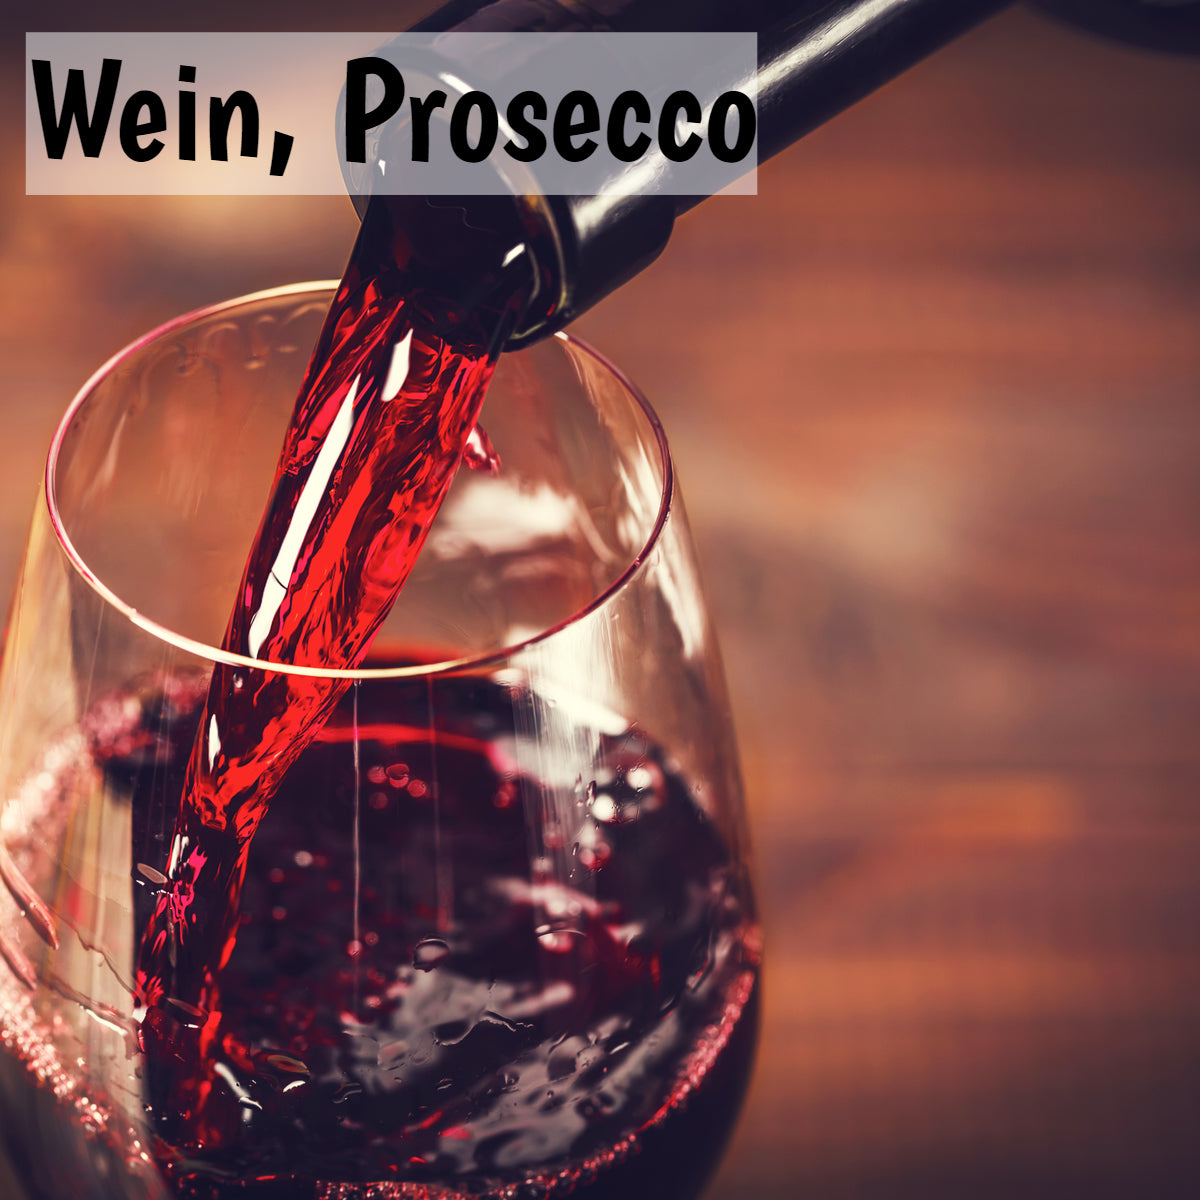 Wein, Prosecco